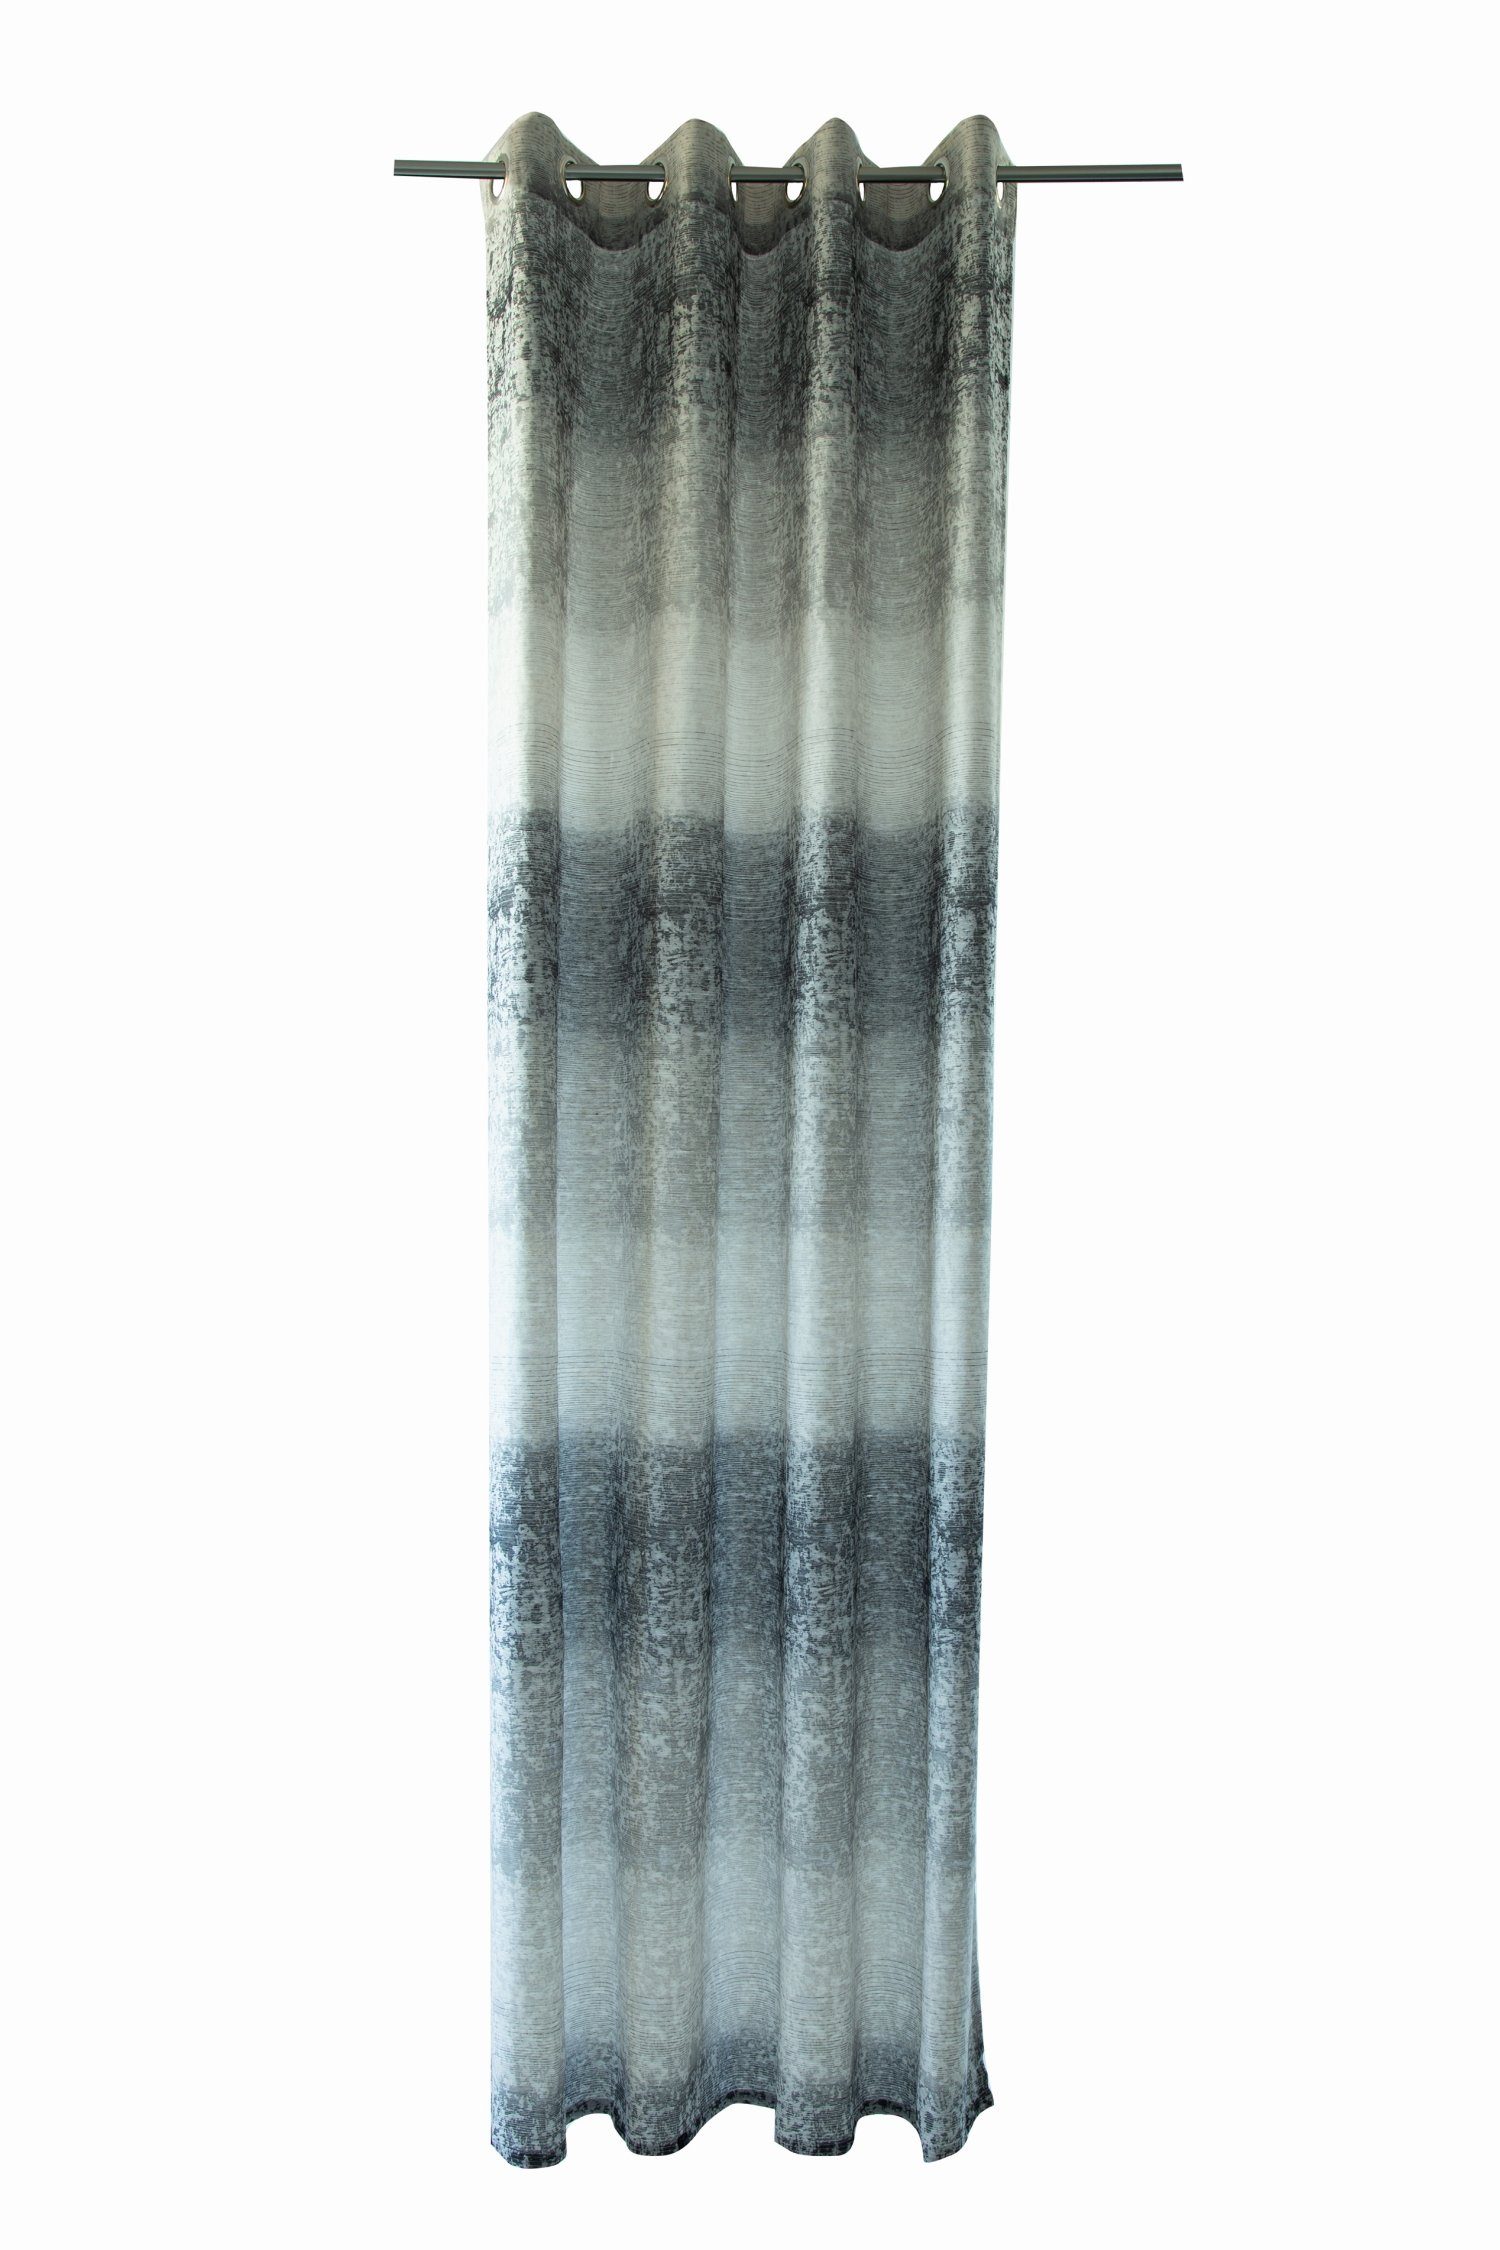 Vorhang, HOMING, Ösenschal Freya 140x245cm Farbe: anthrazit